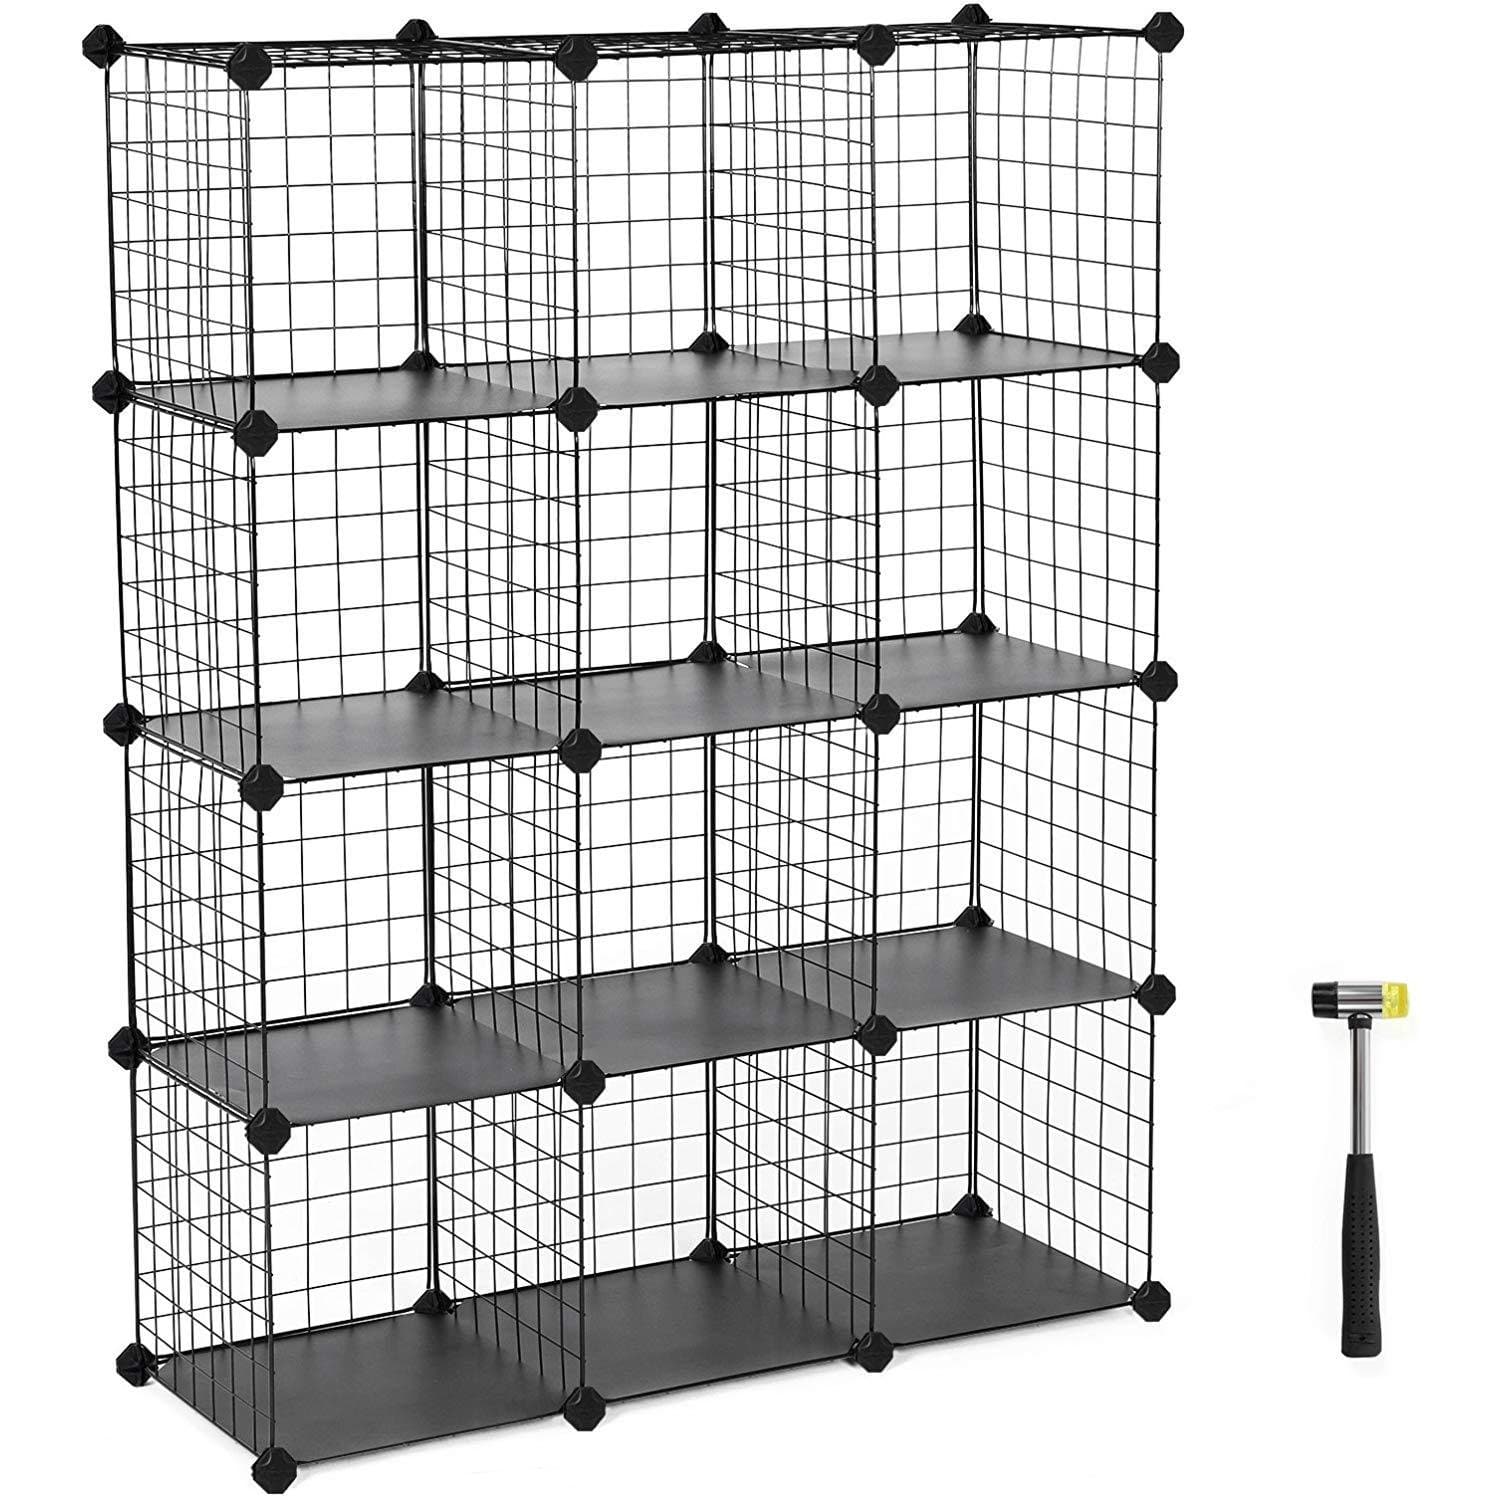 Nancy's Plug-in rack - Storage system - Storage cabinet - Grid rack